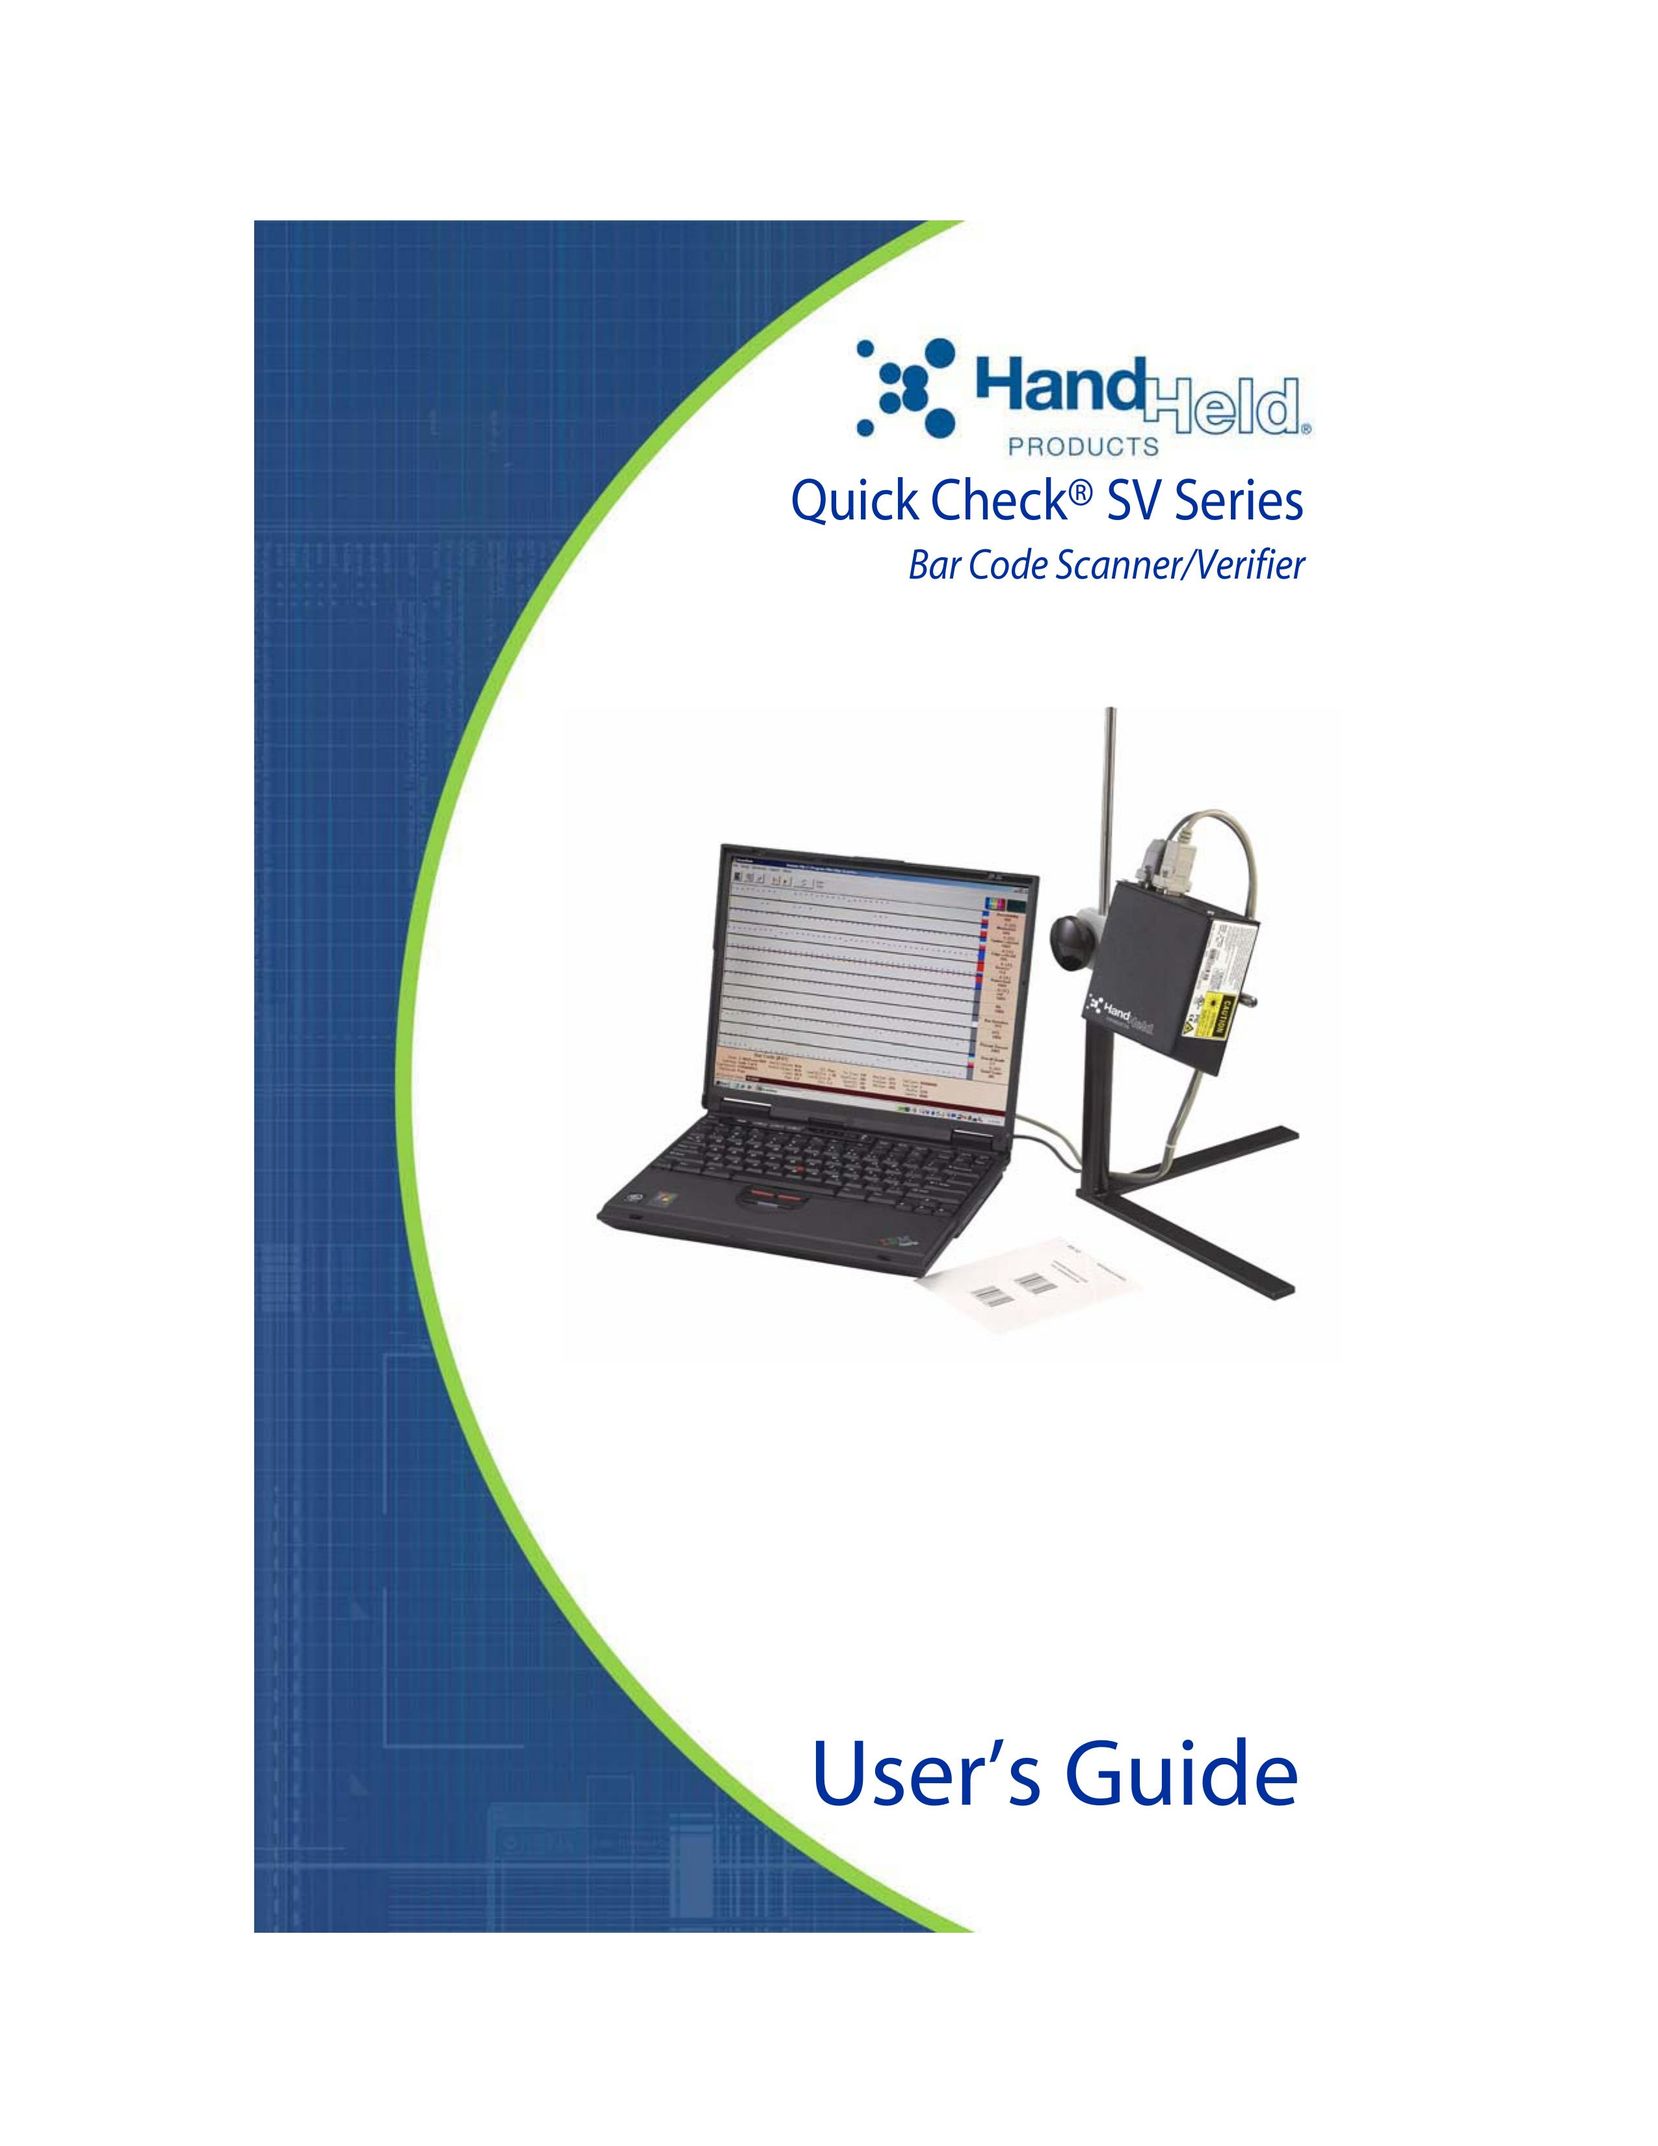 HandHeld Entertainment SV Series Scanner User Manual